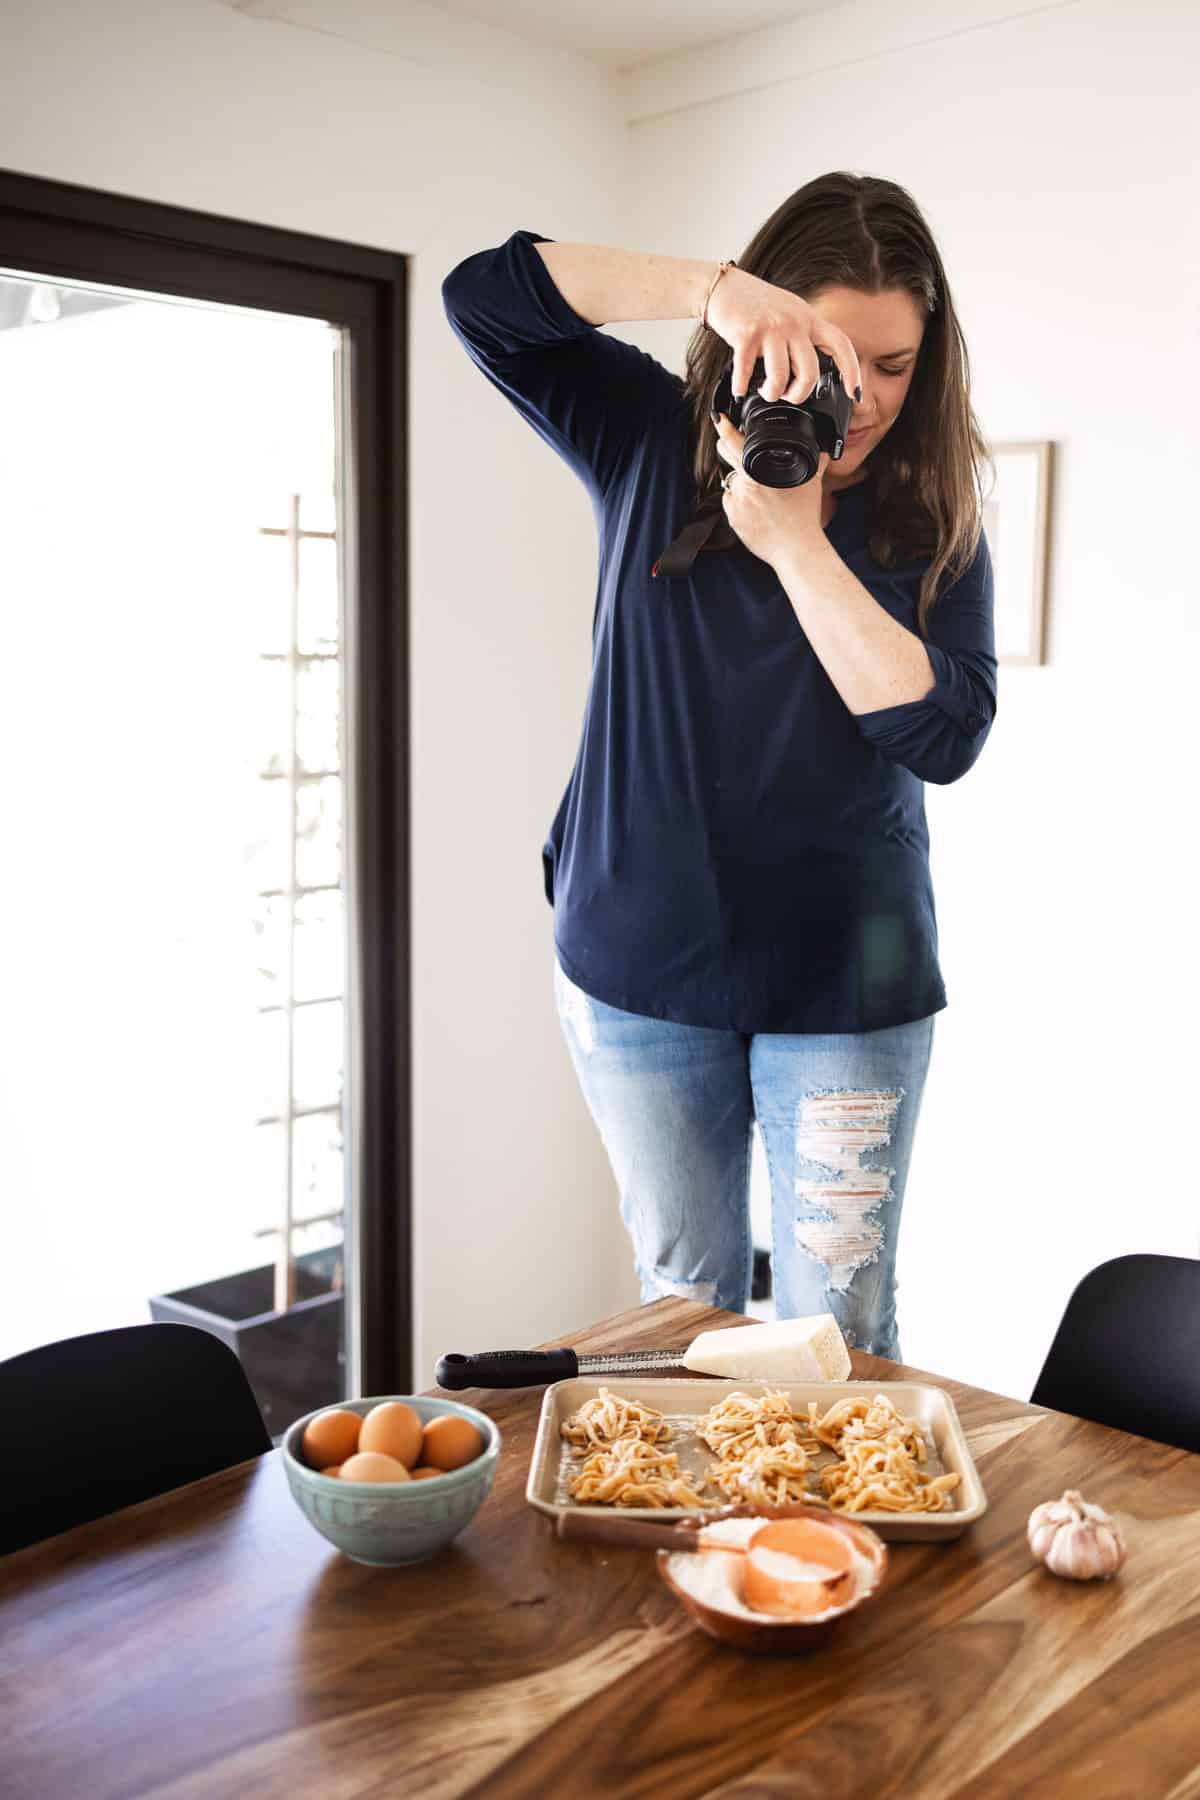 amanda scarlati taking a photo of food on a kitchen table.